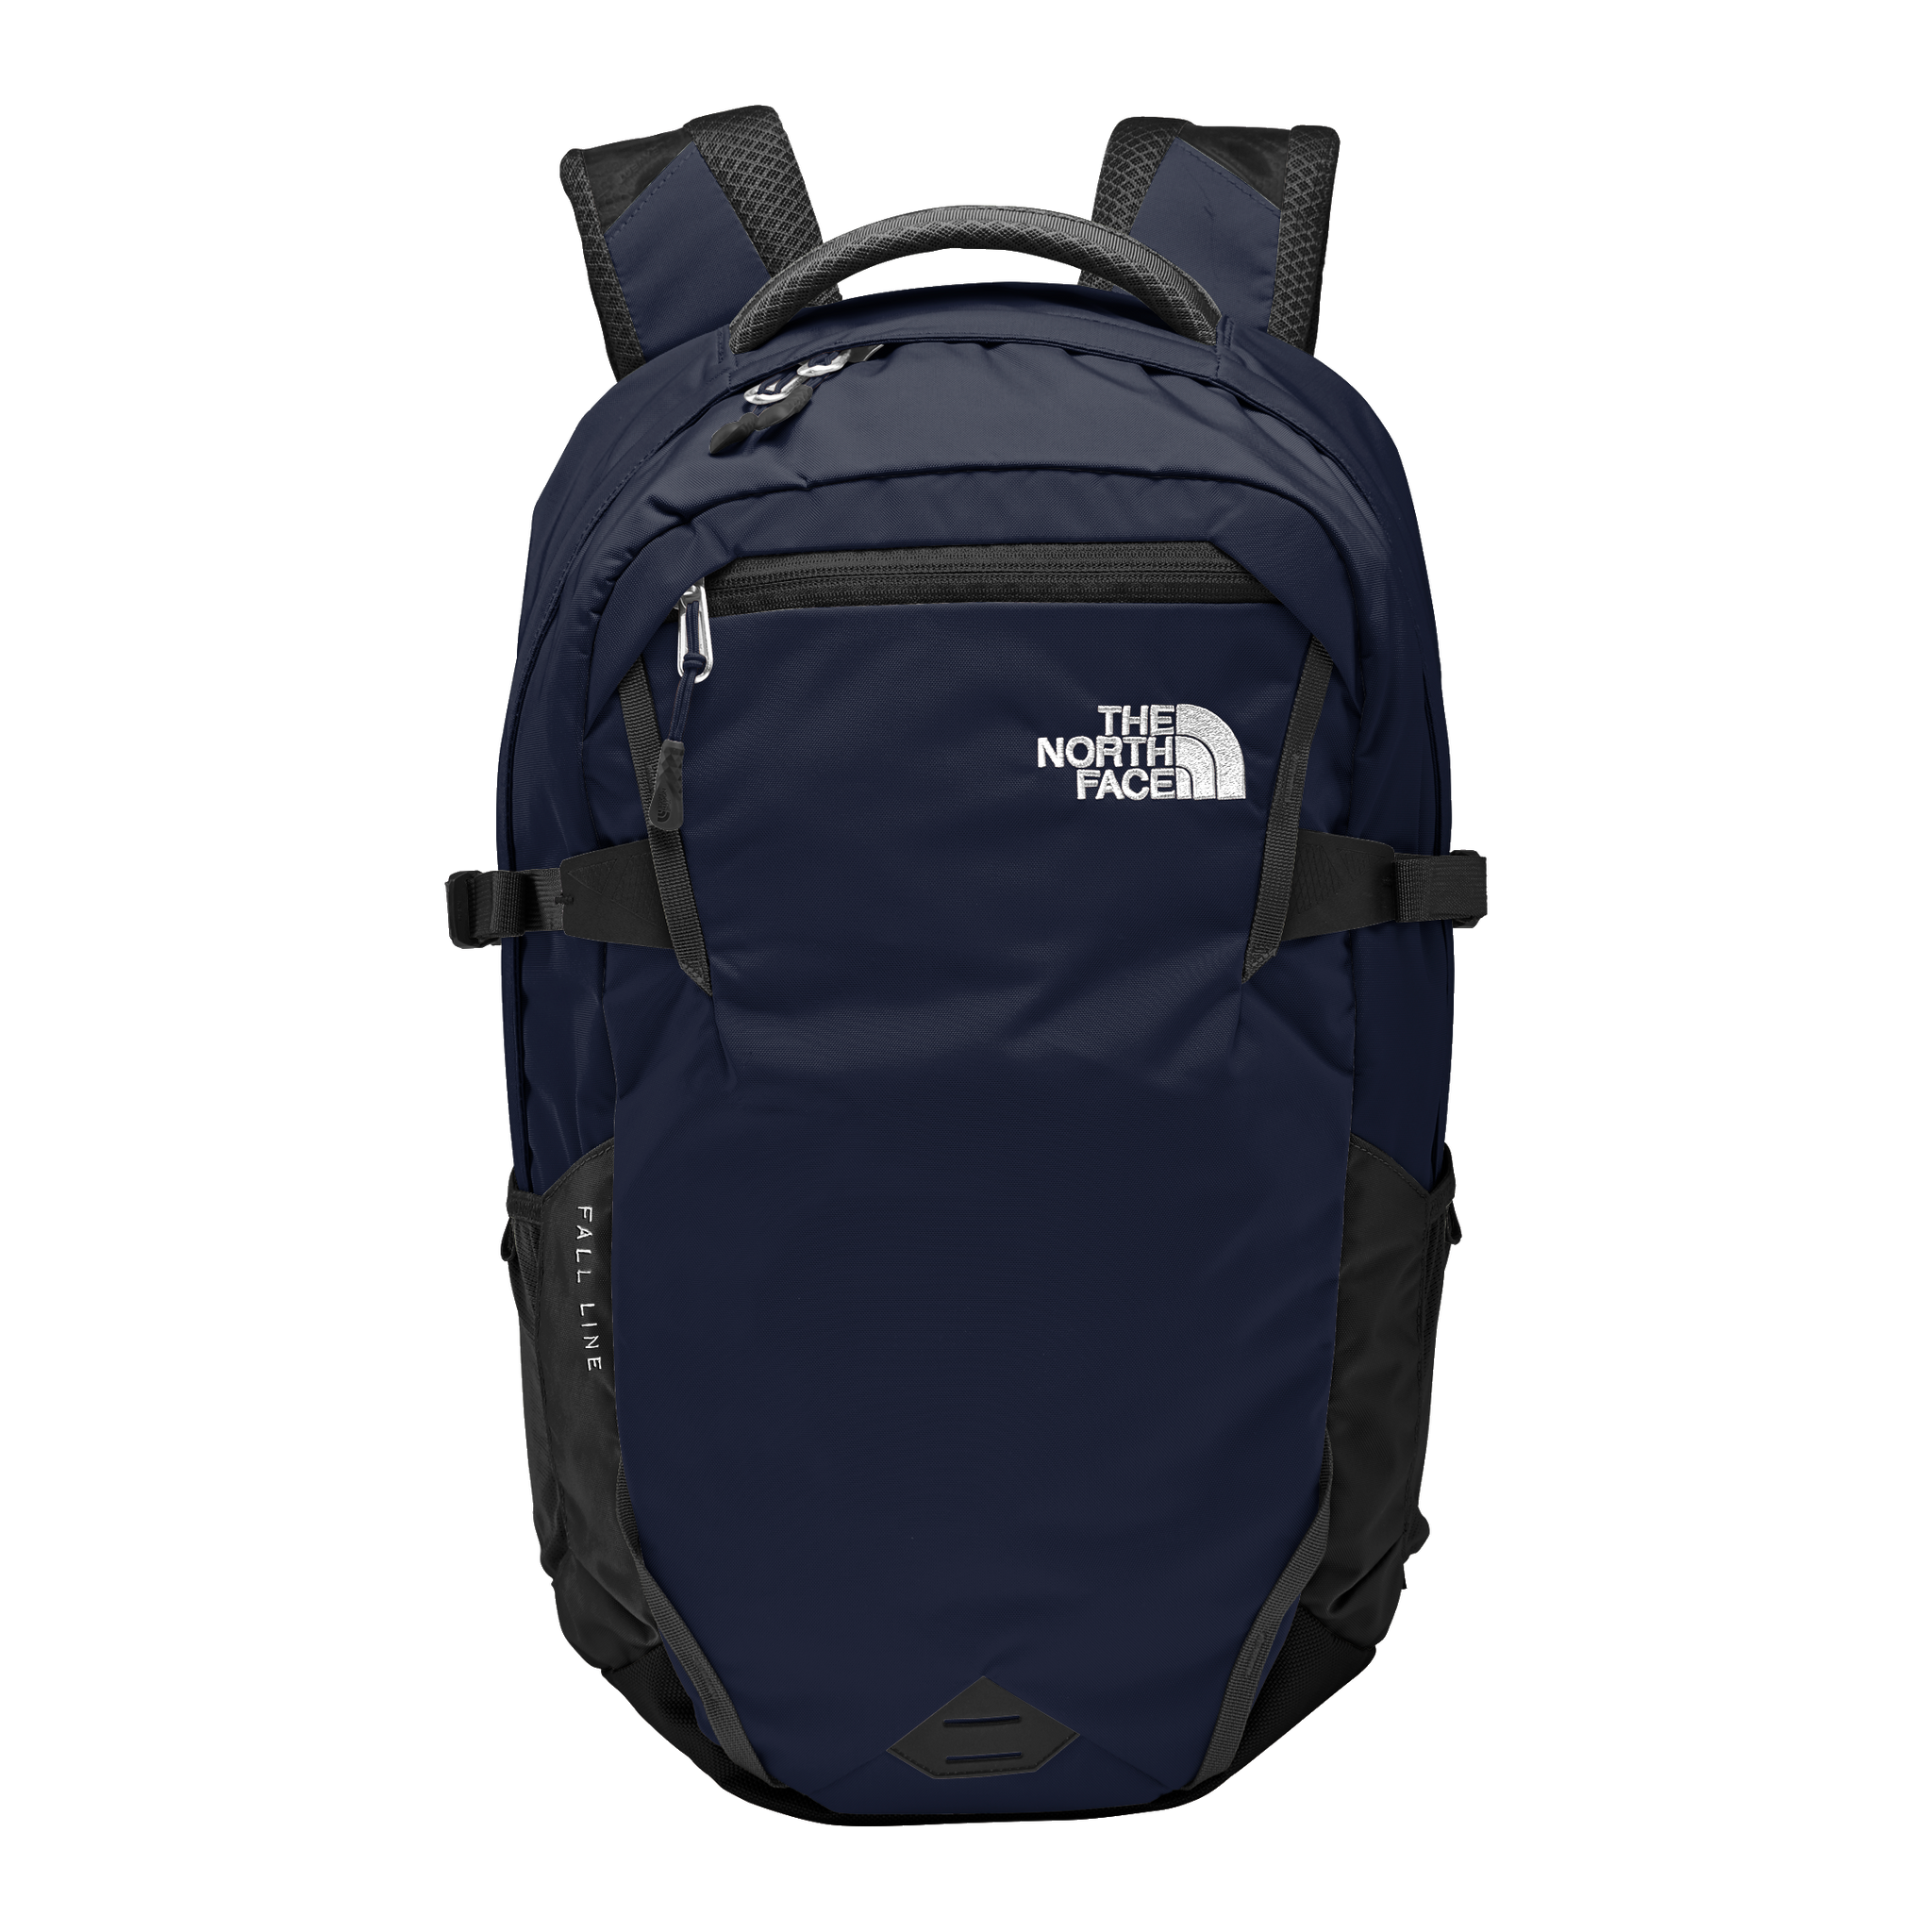 A1919 Fall Line Backpack